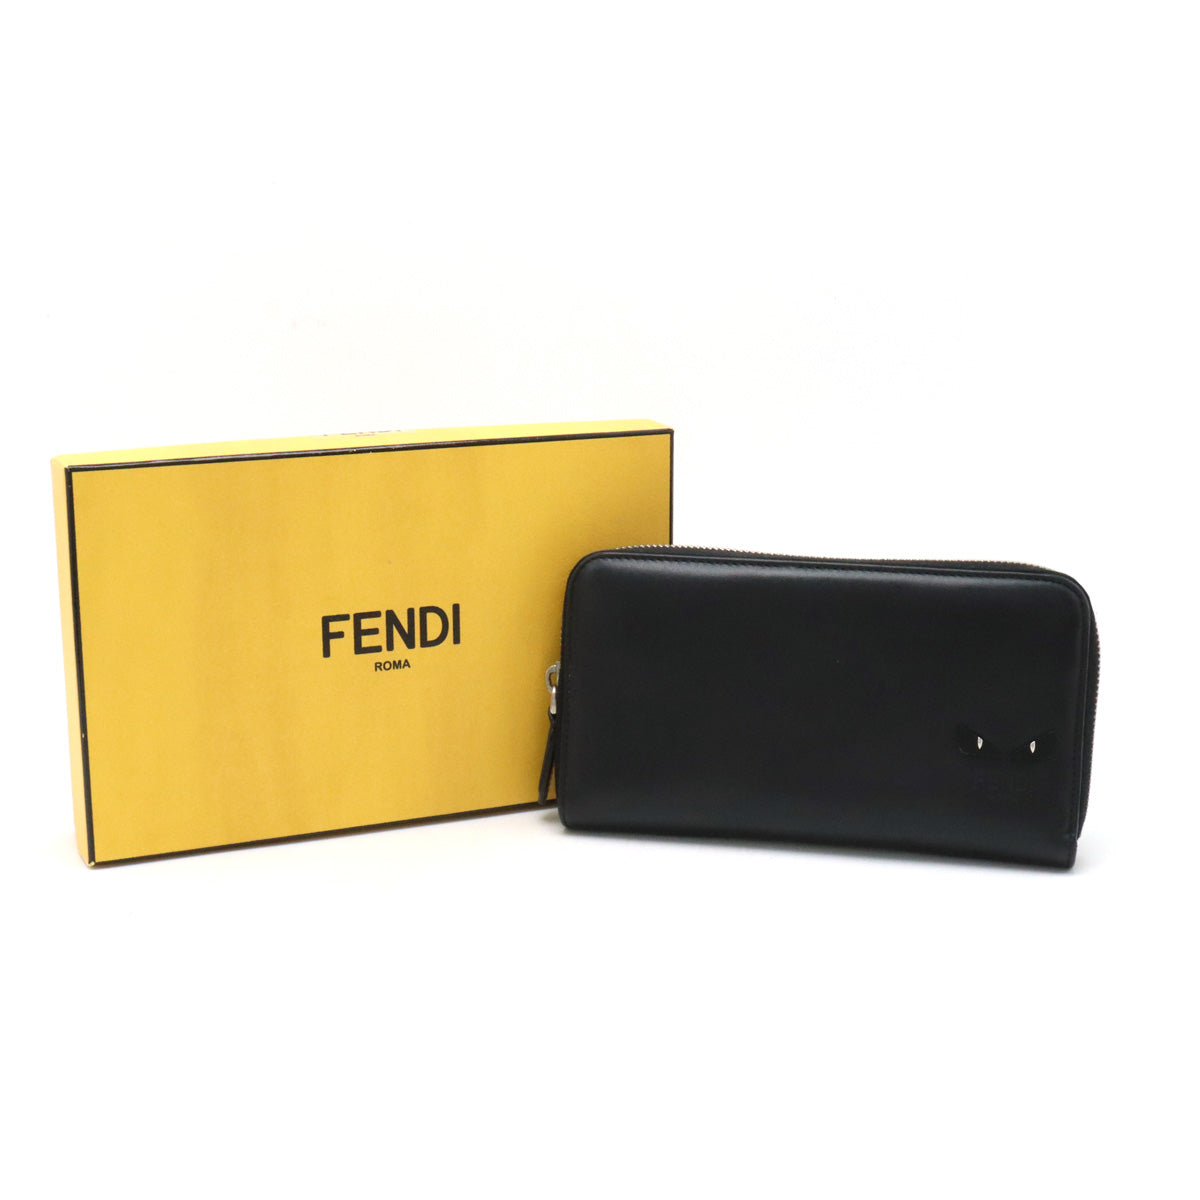 FENDI FENDI Monster Bugs Round Fassner Long Wallet Leather Black Black Silver Gold 7M0210